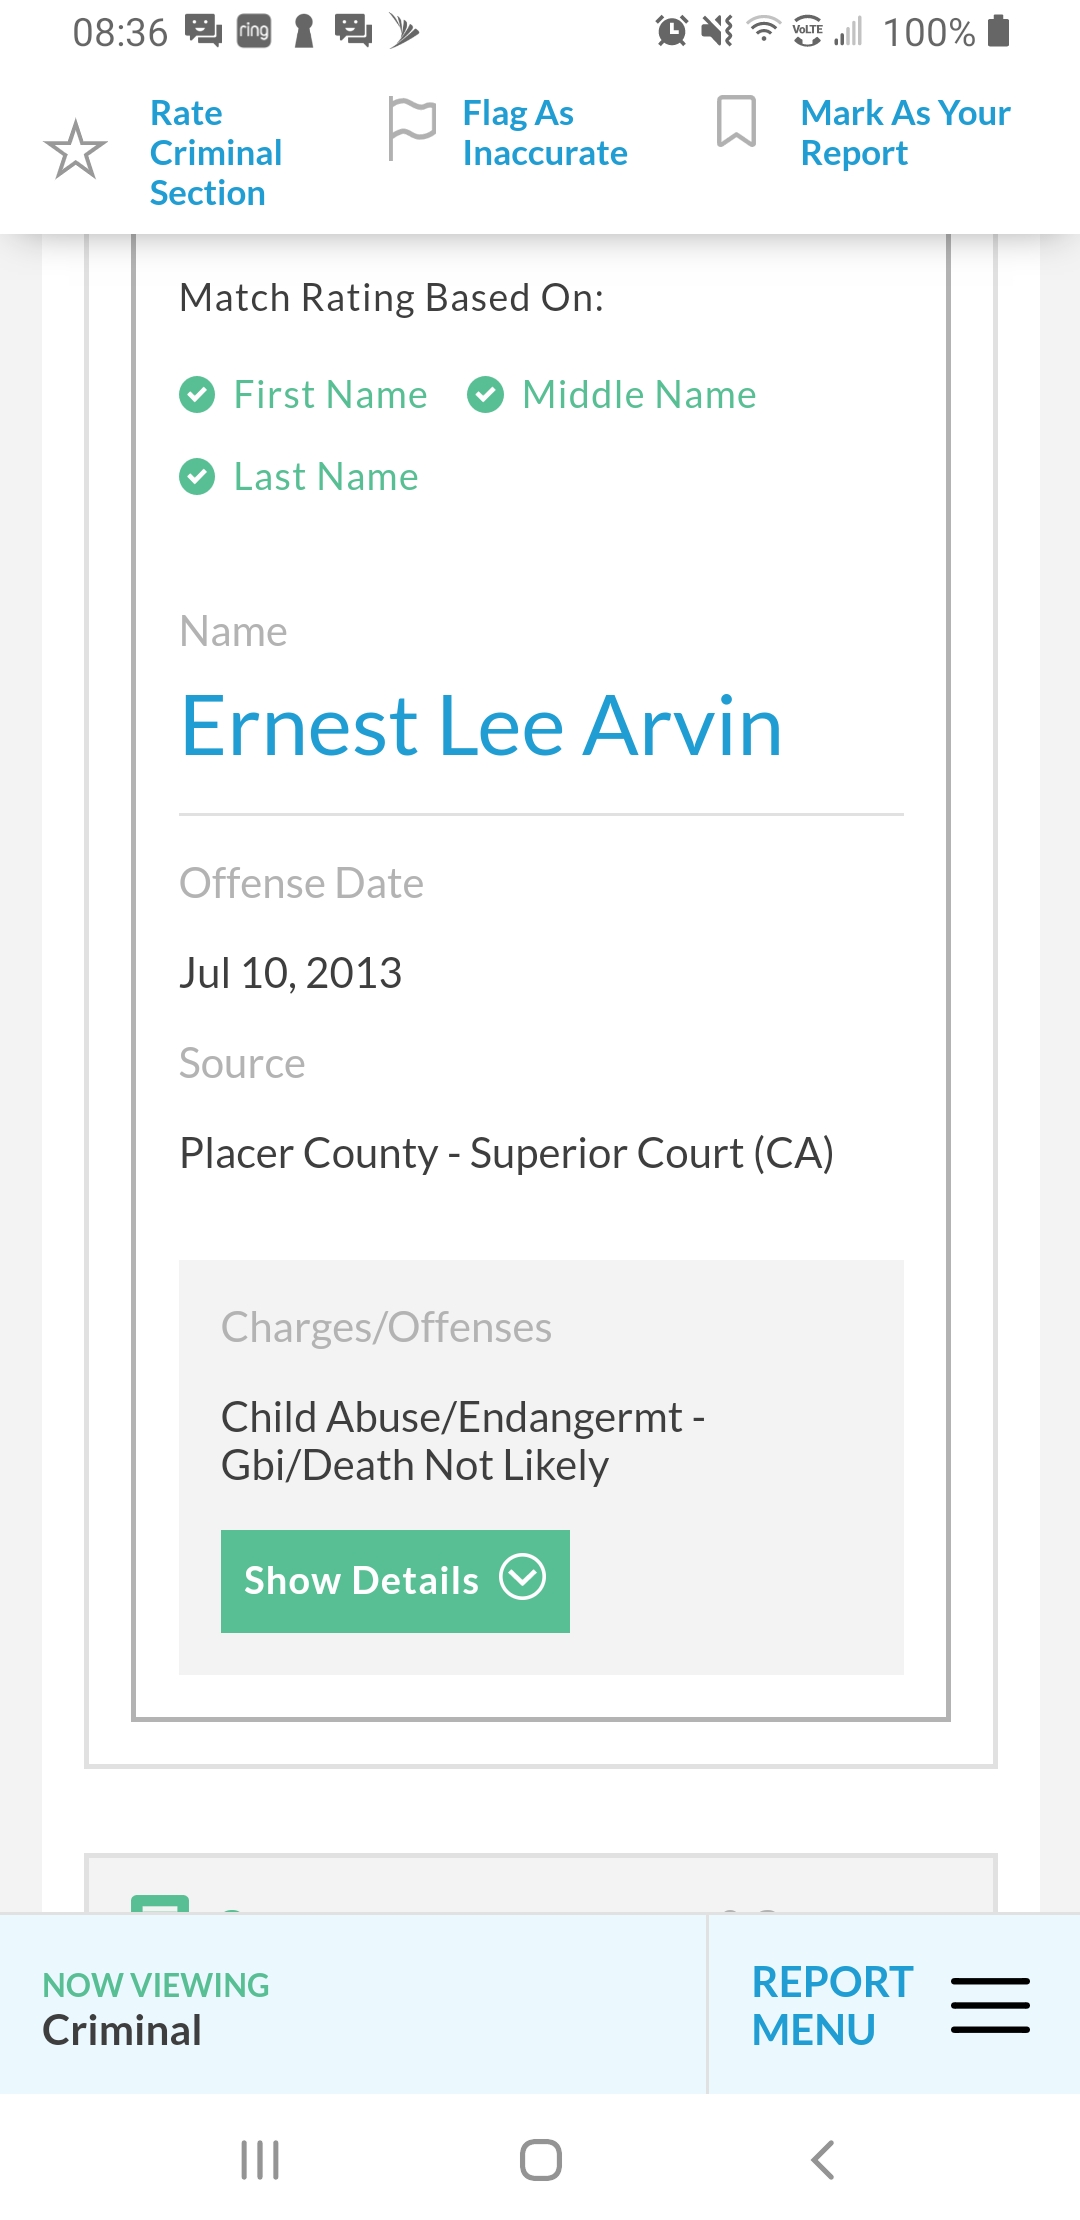 Criminal profile Kentucky AKA Ernie Arvin!! 